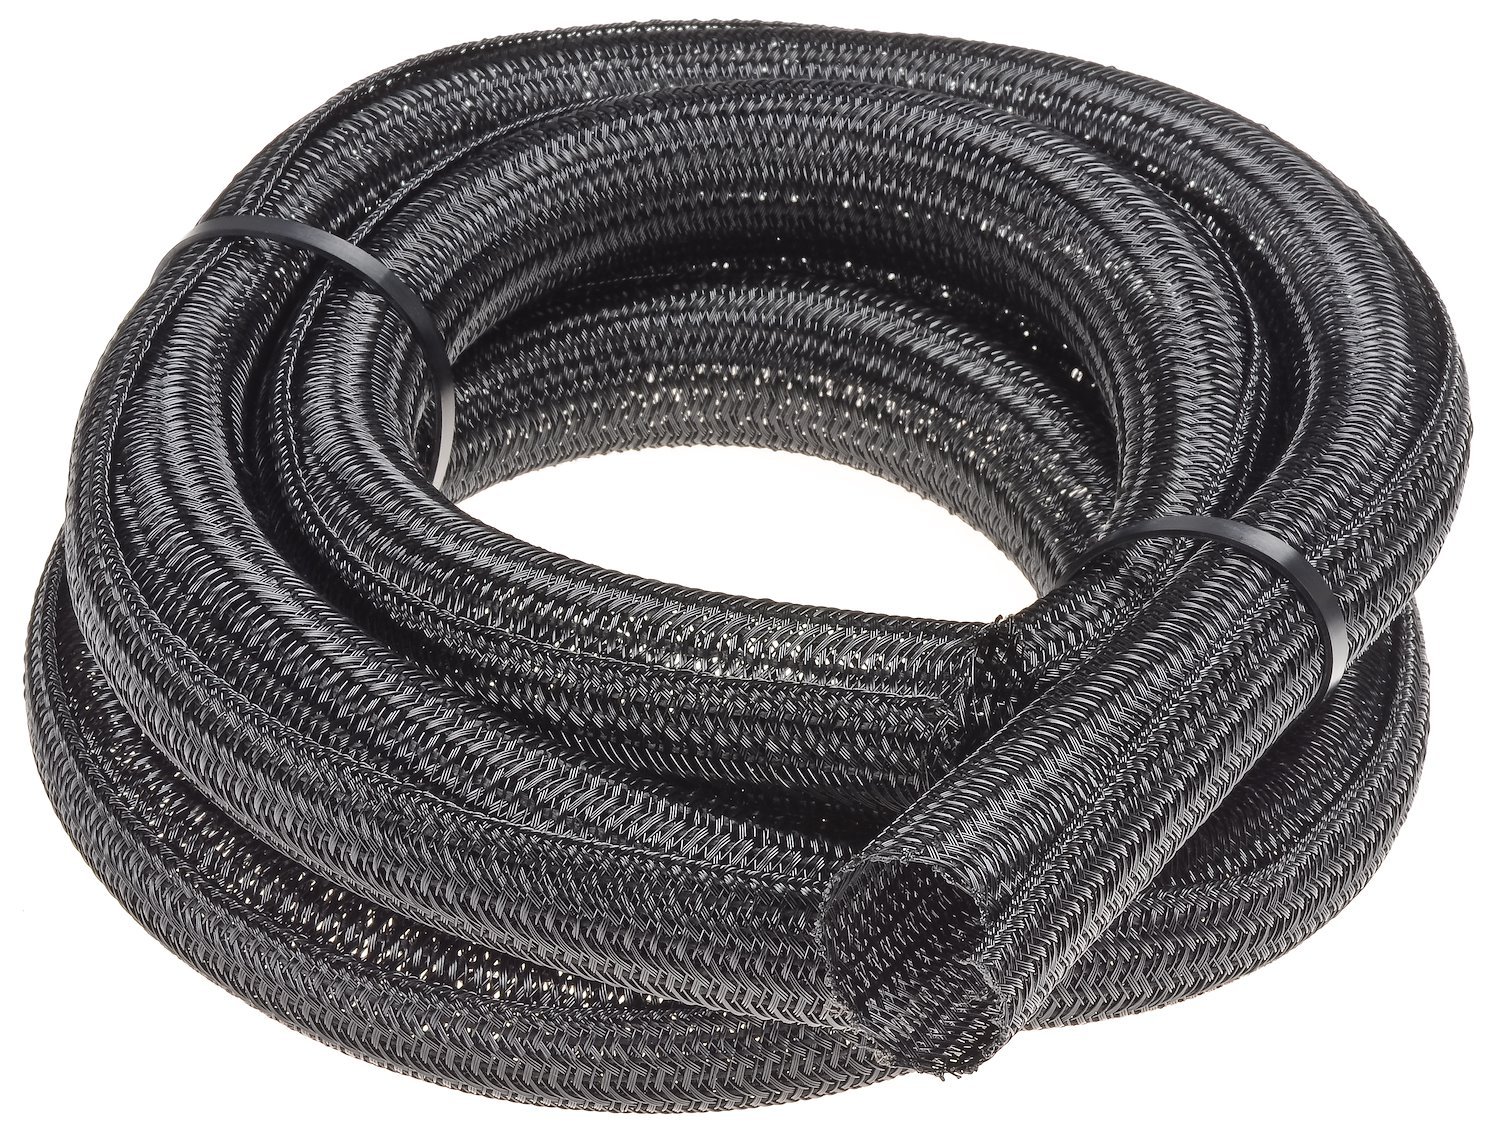 Flexbraid Wire Cover Kit Temperature: -167ºF to 257ºF